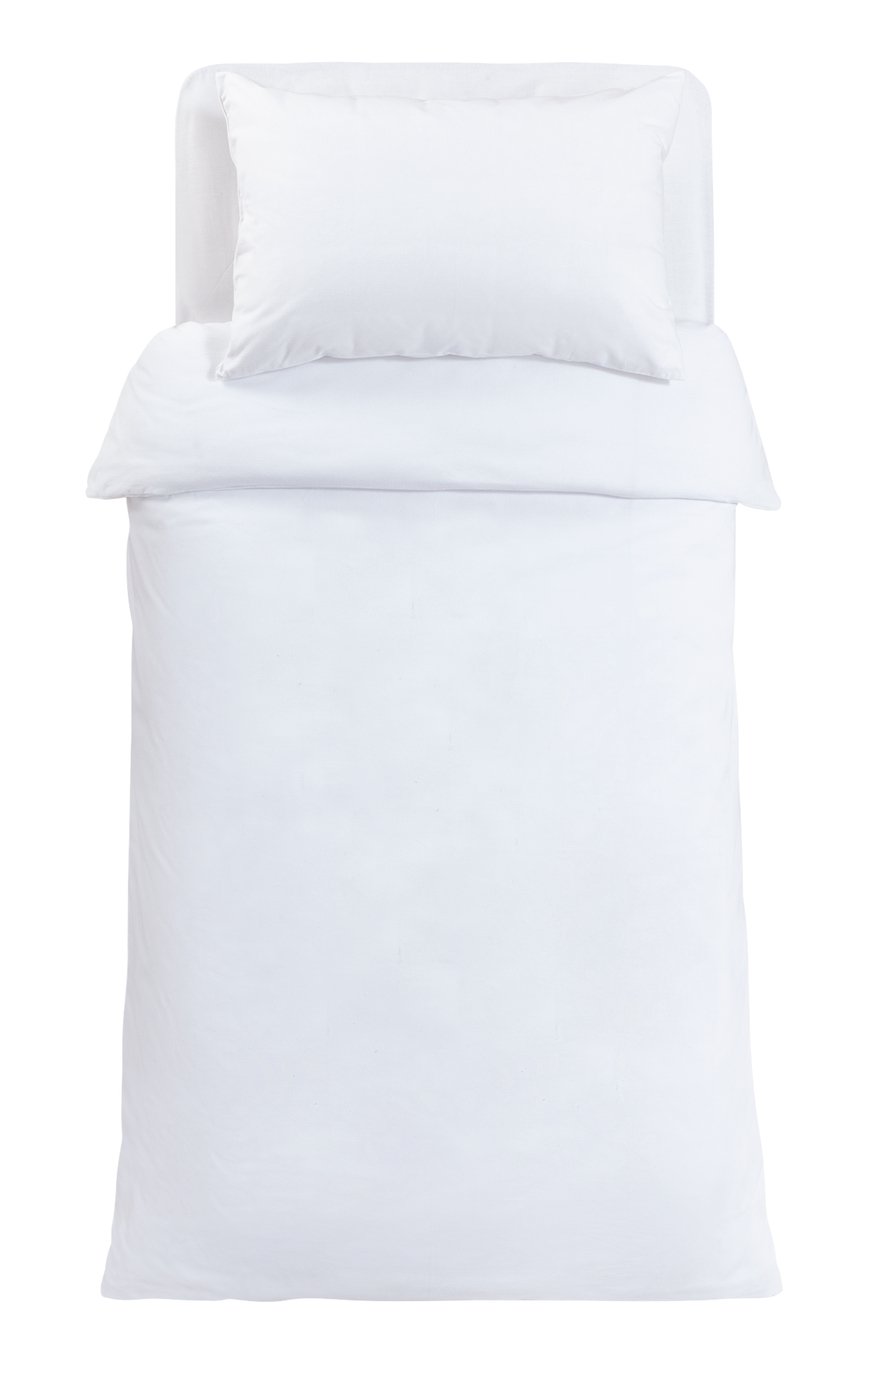 Argos Home Brushed Cotton Plain White Bedding Set - Toddler